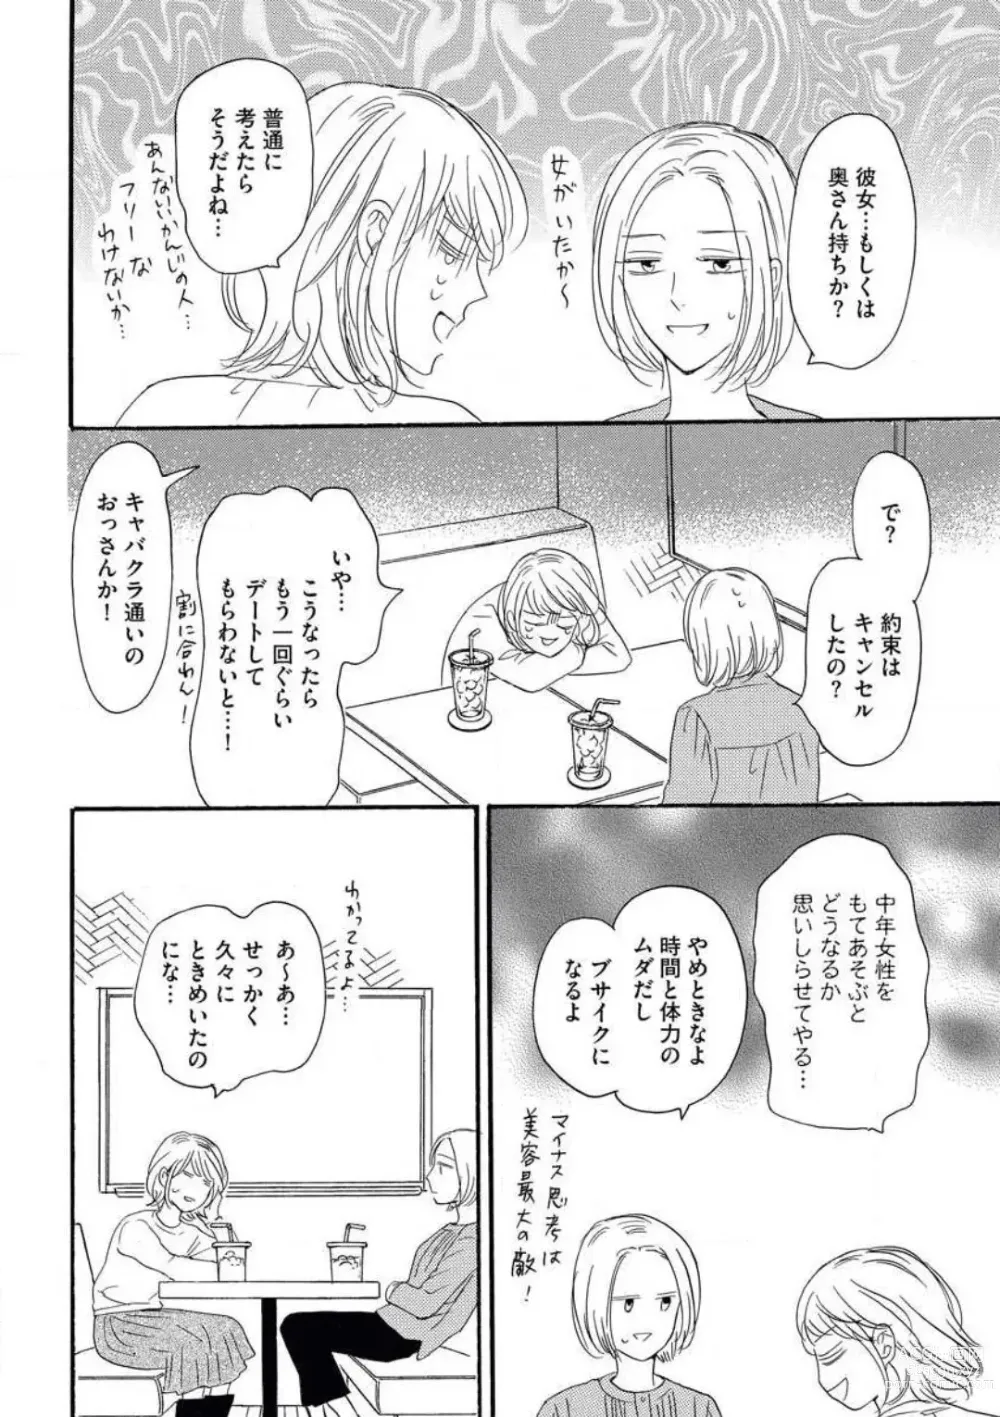 Page 17 of manga Giwaku no Rabu Matchingu